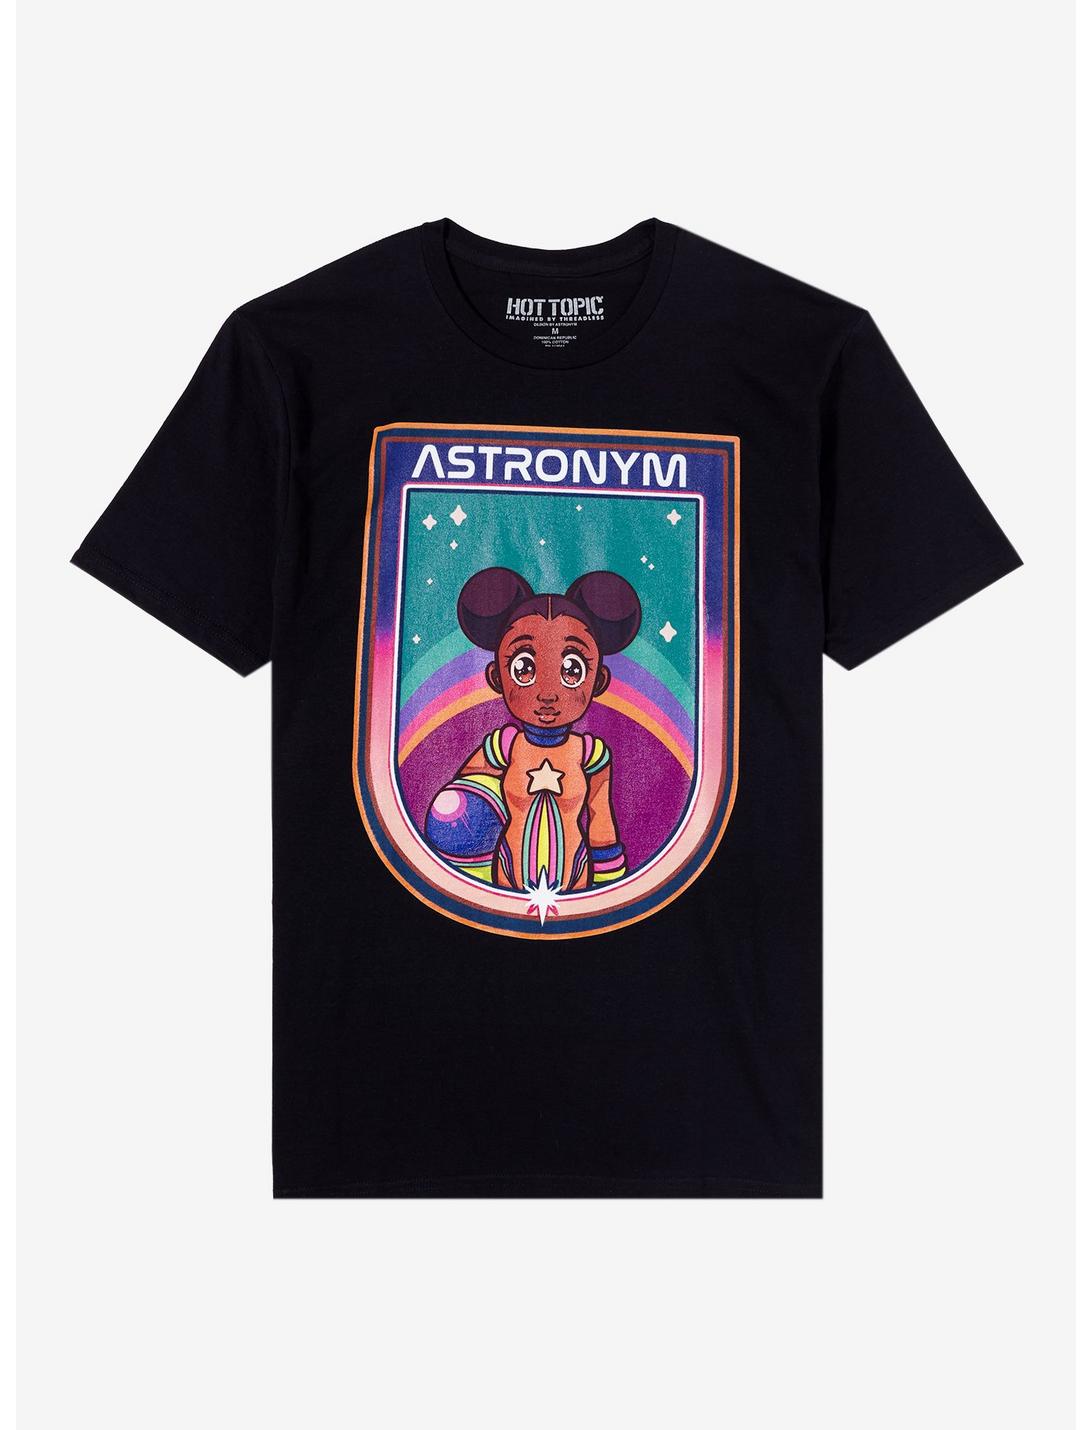 Rainbow Girl Astronaut T-Shirt By Astronym, BLACK, hi-res